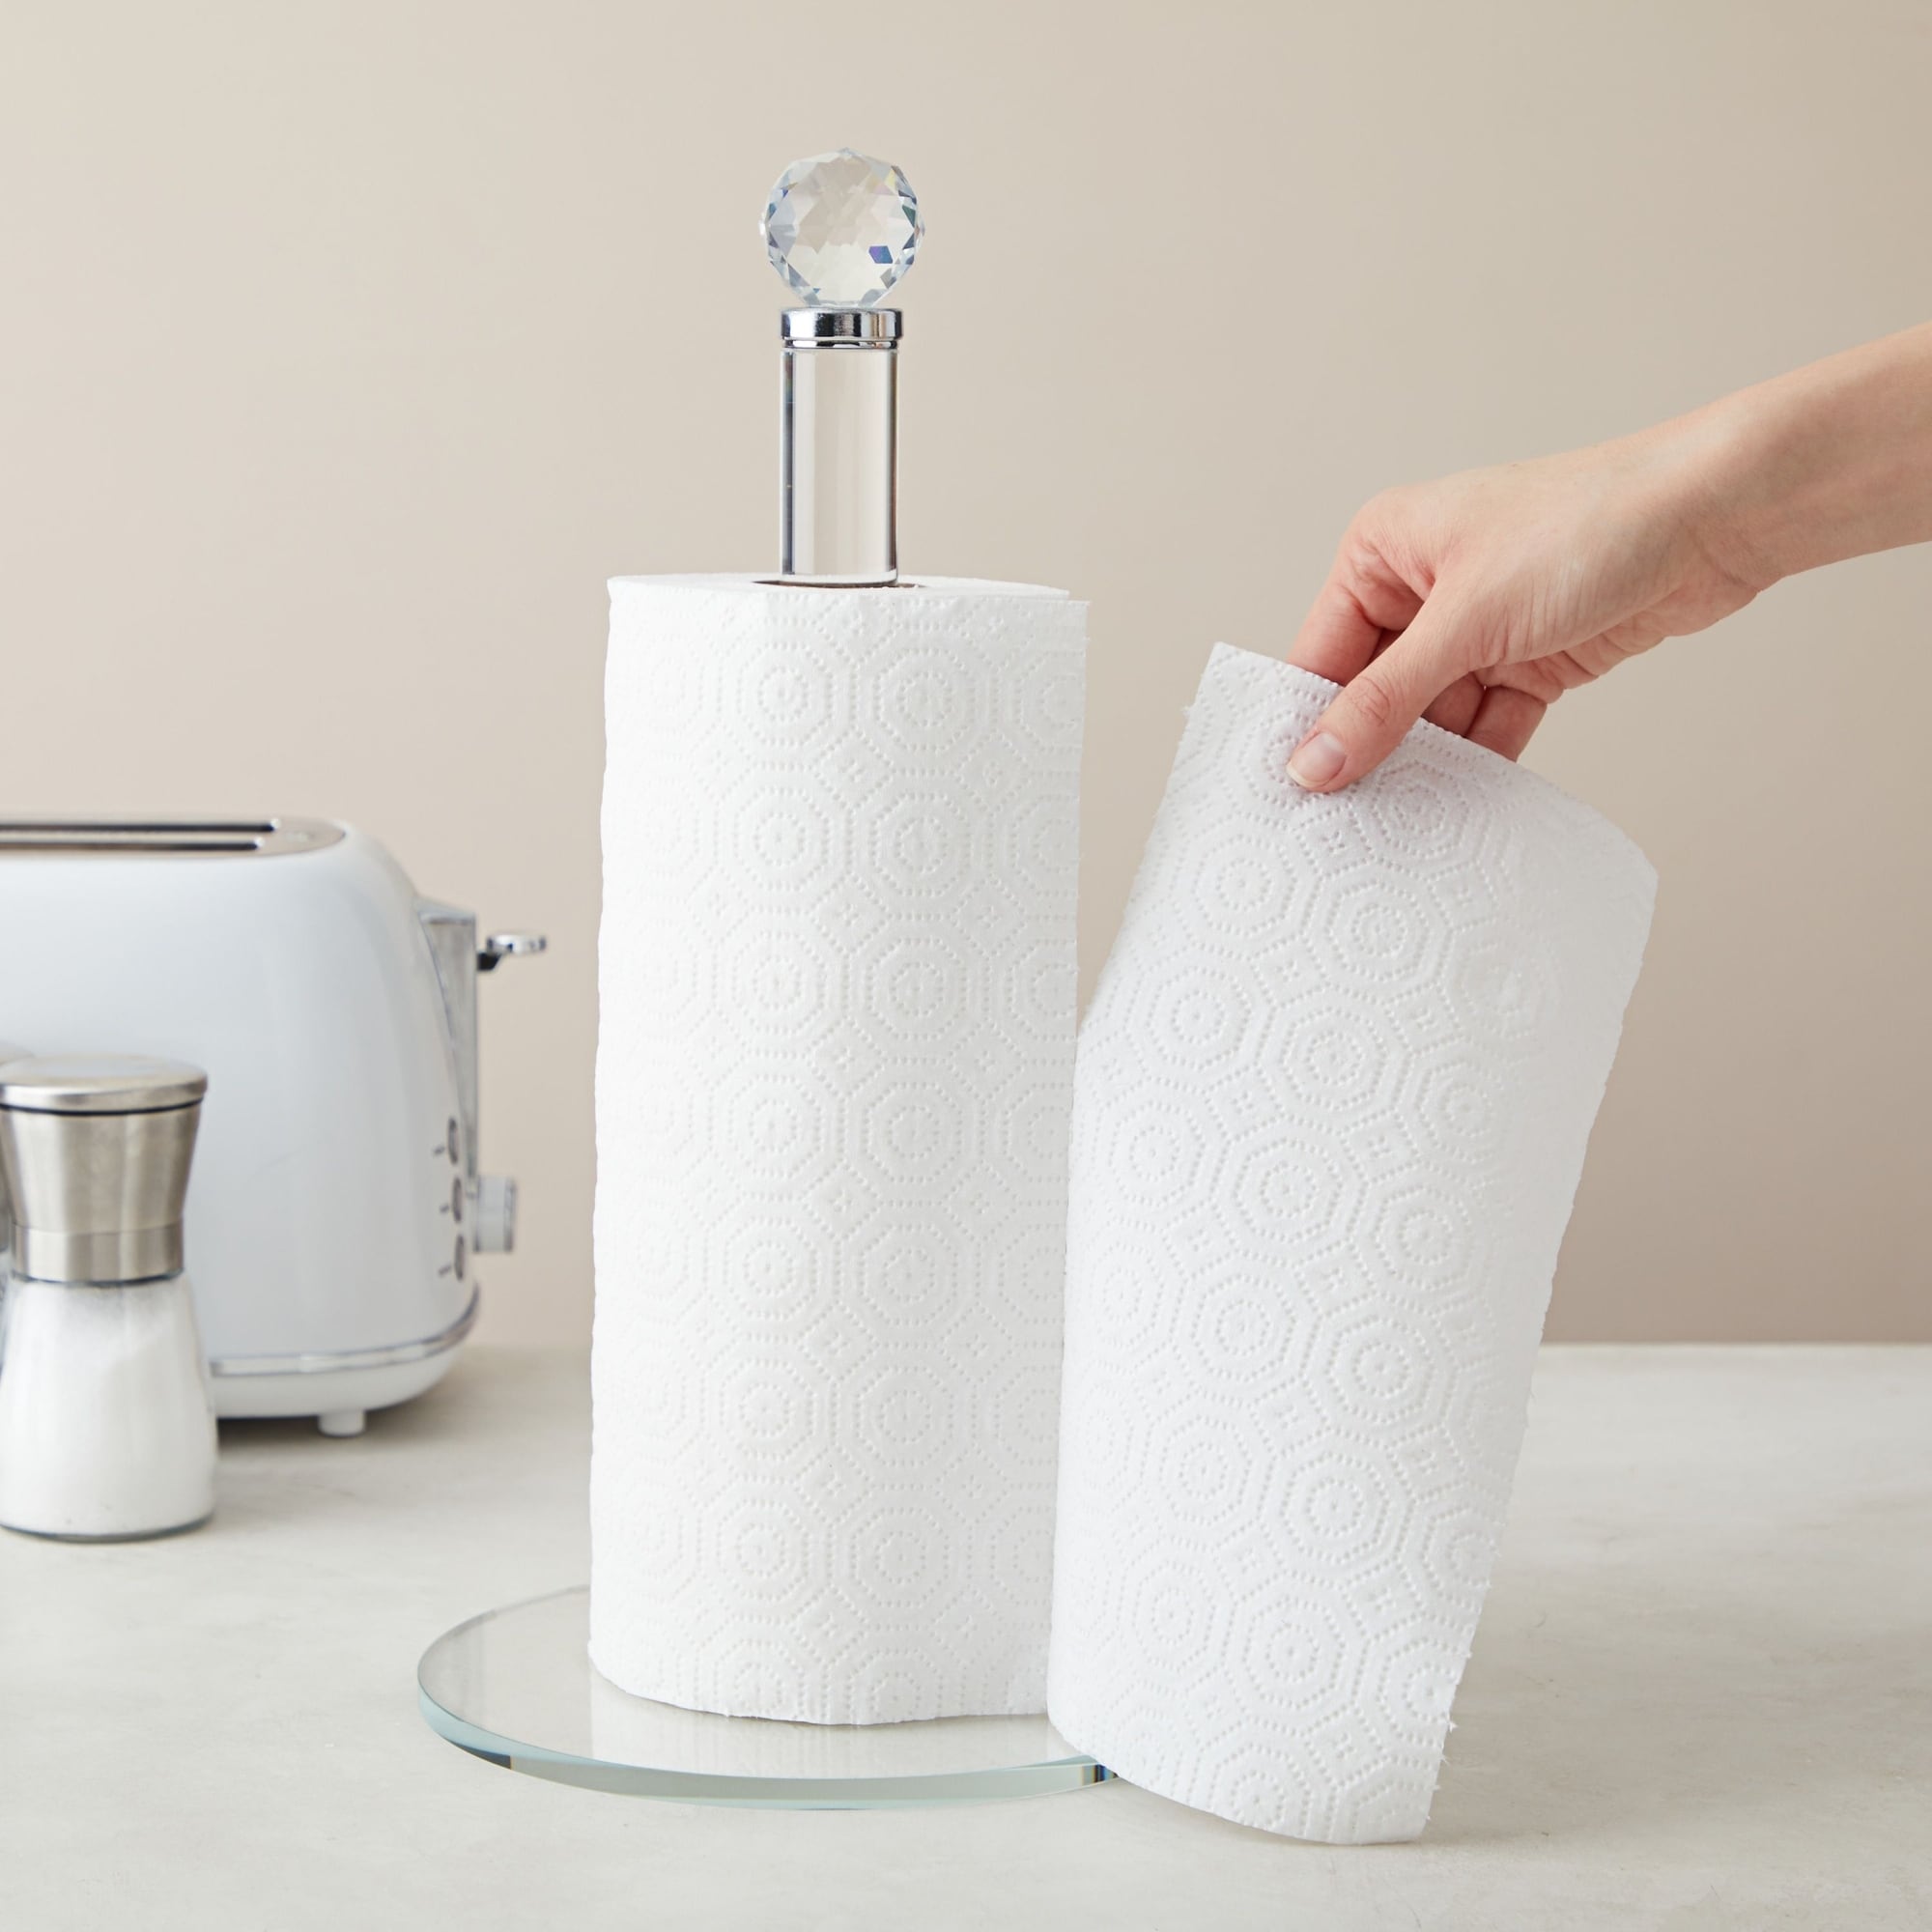 Teak Wall-Mount Paper Towel Holder - 12-1/4 W x 1-7/8 H x 4-3/8